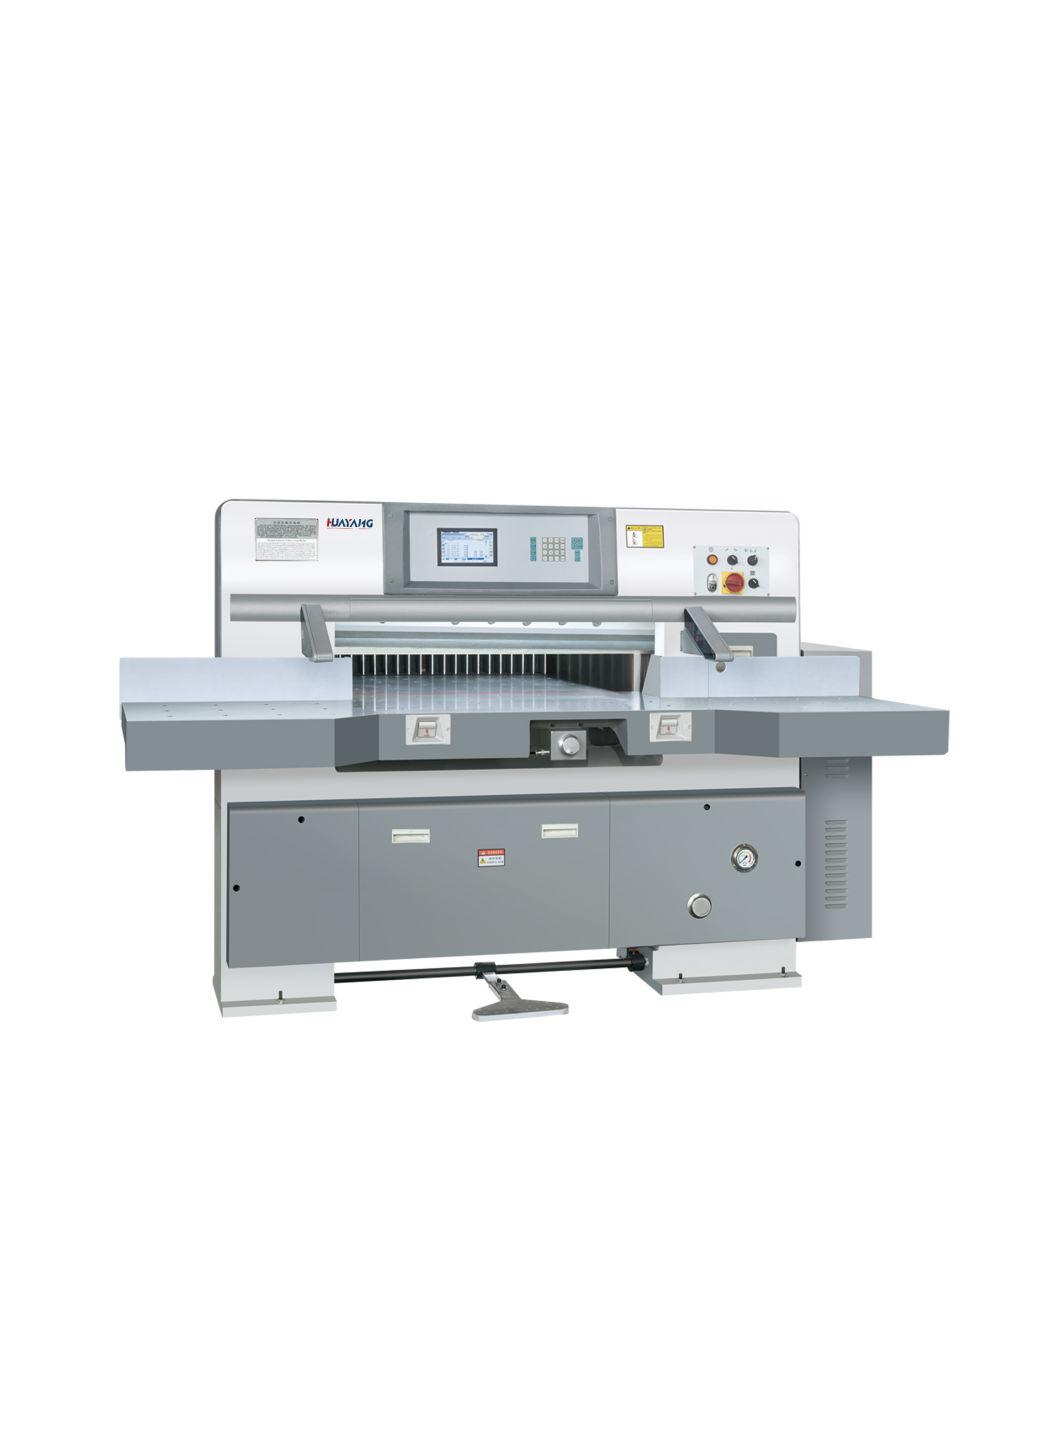 Double Hydraulic Paper Cutting Machine 920